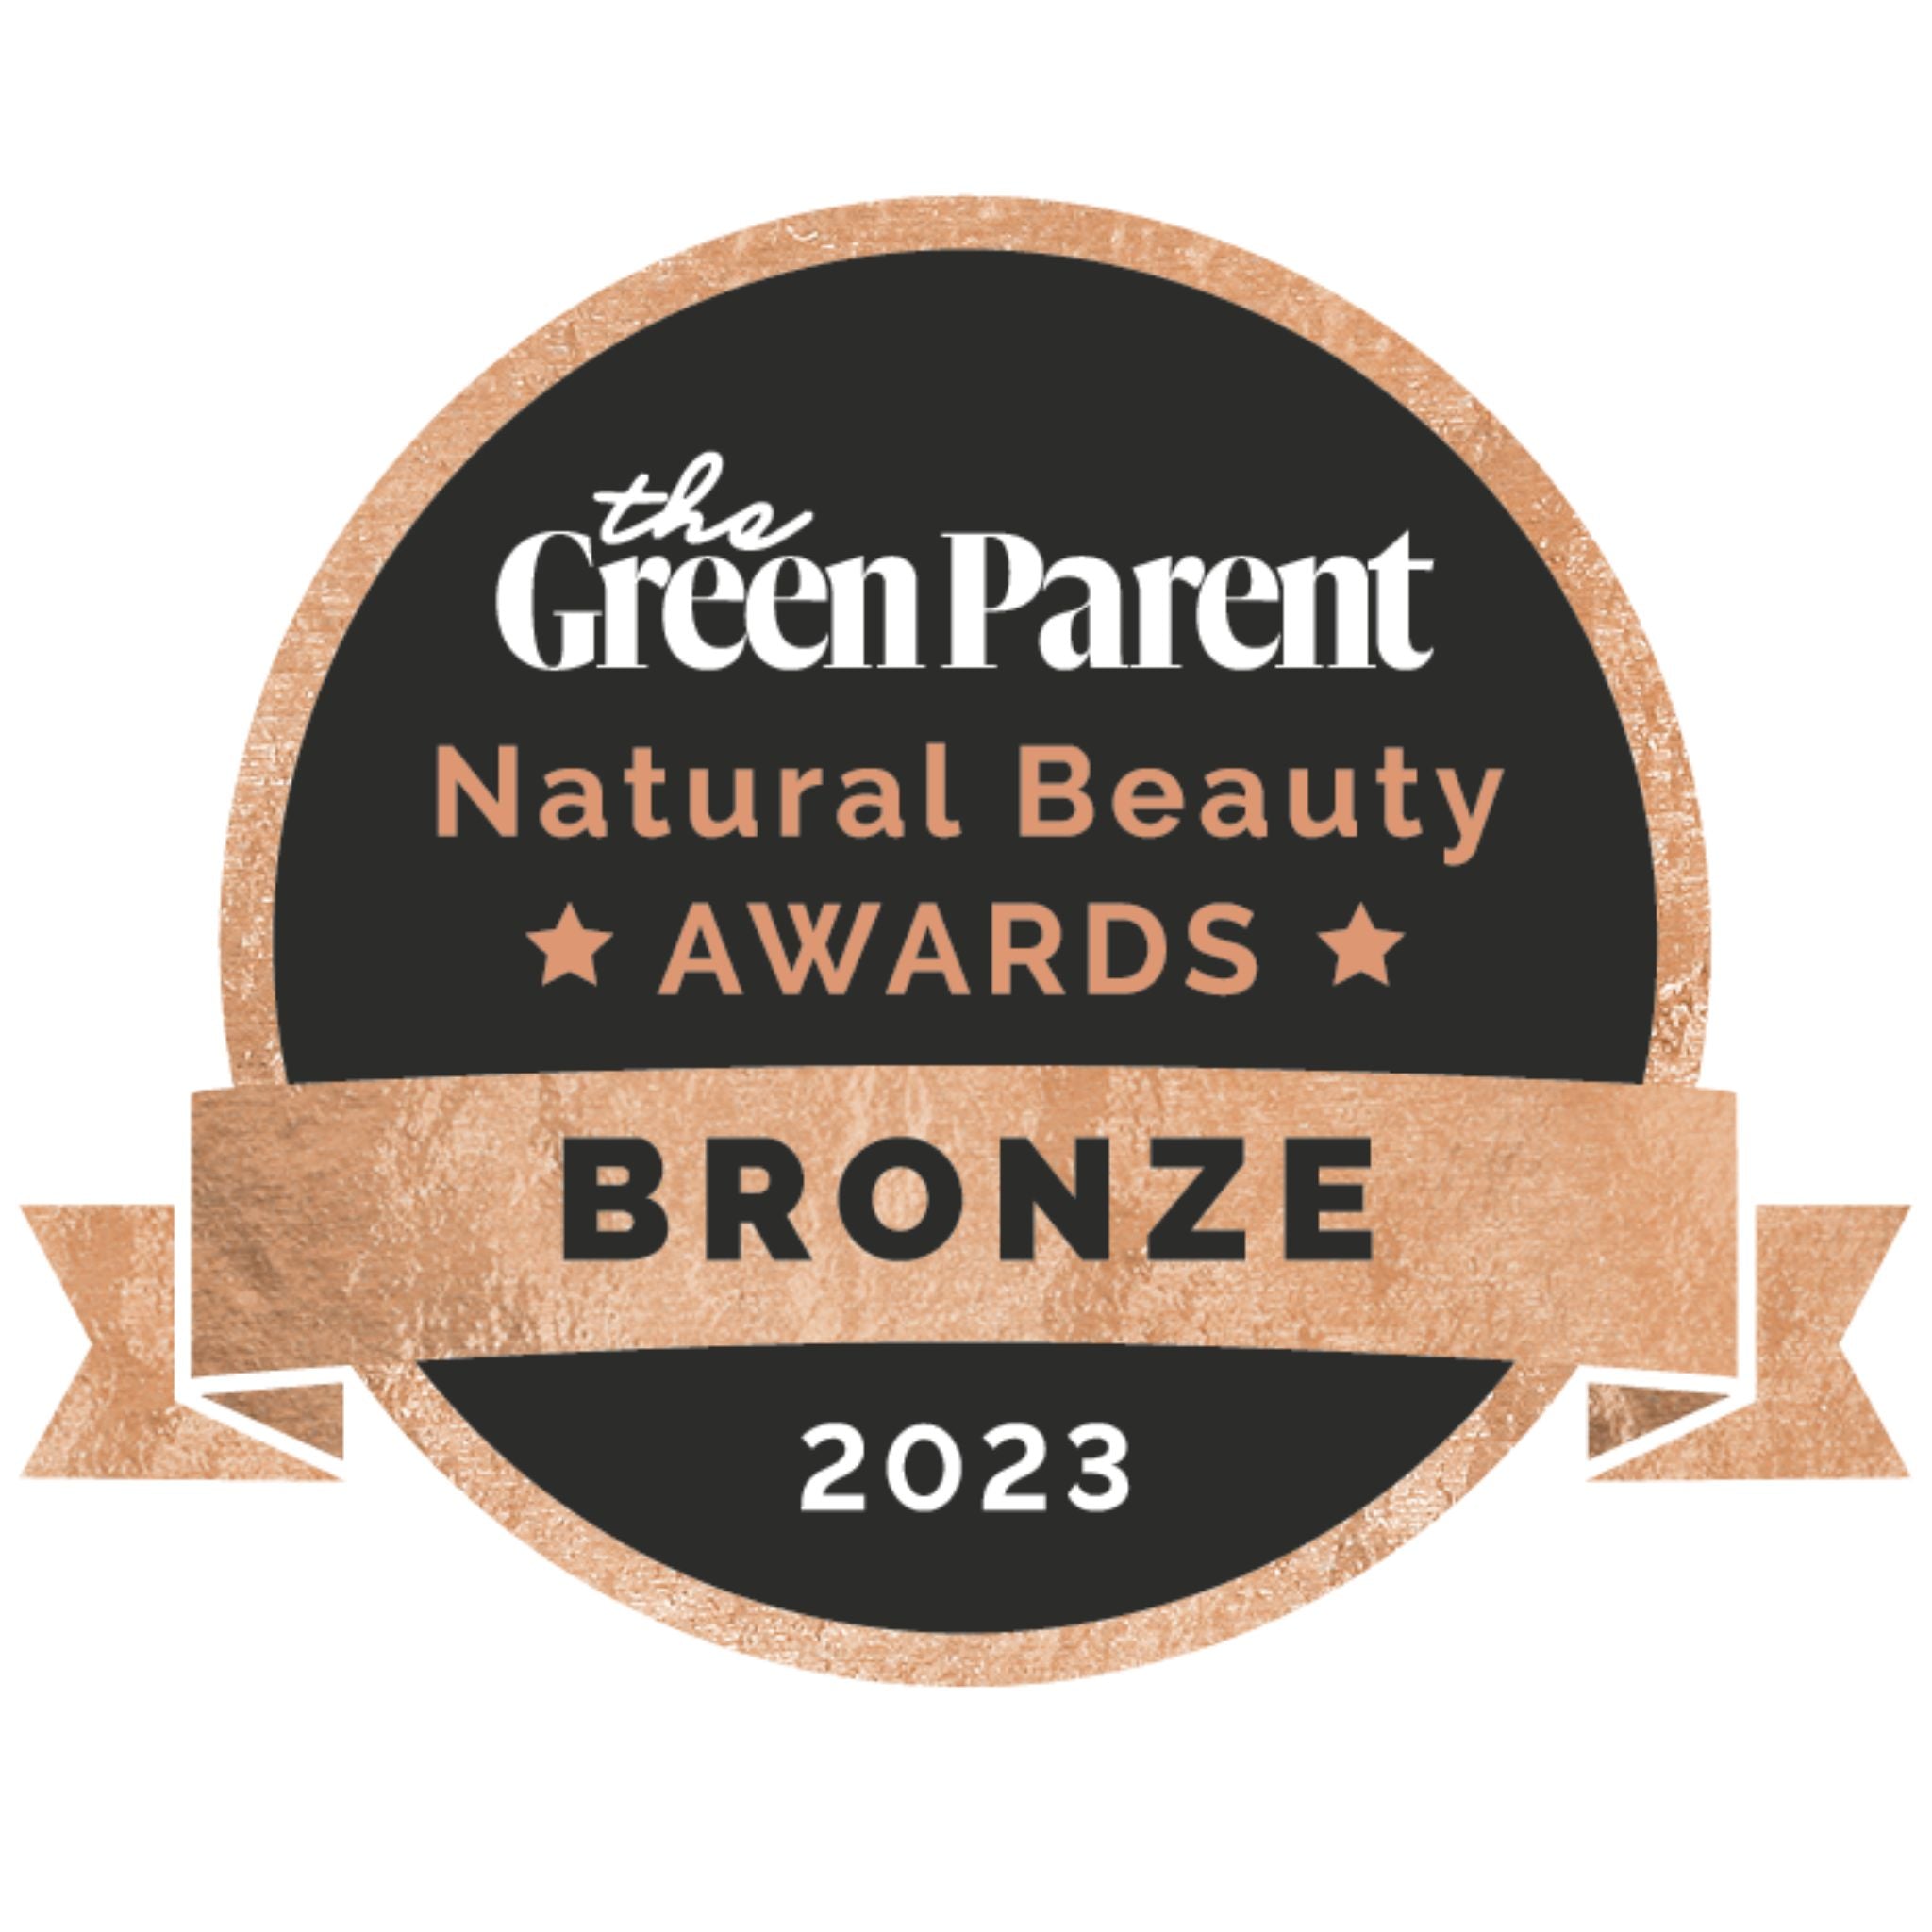 The Green Parent Bronze Award